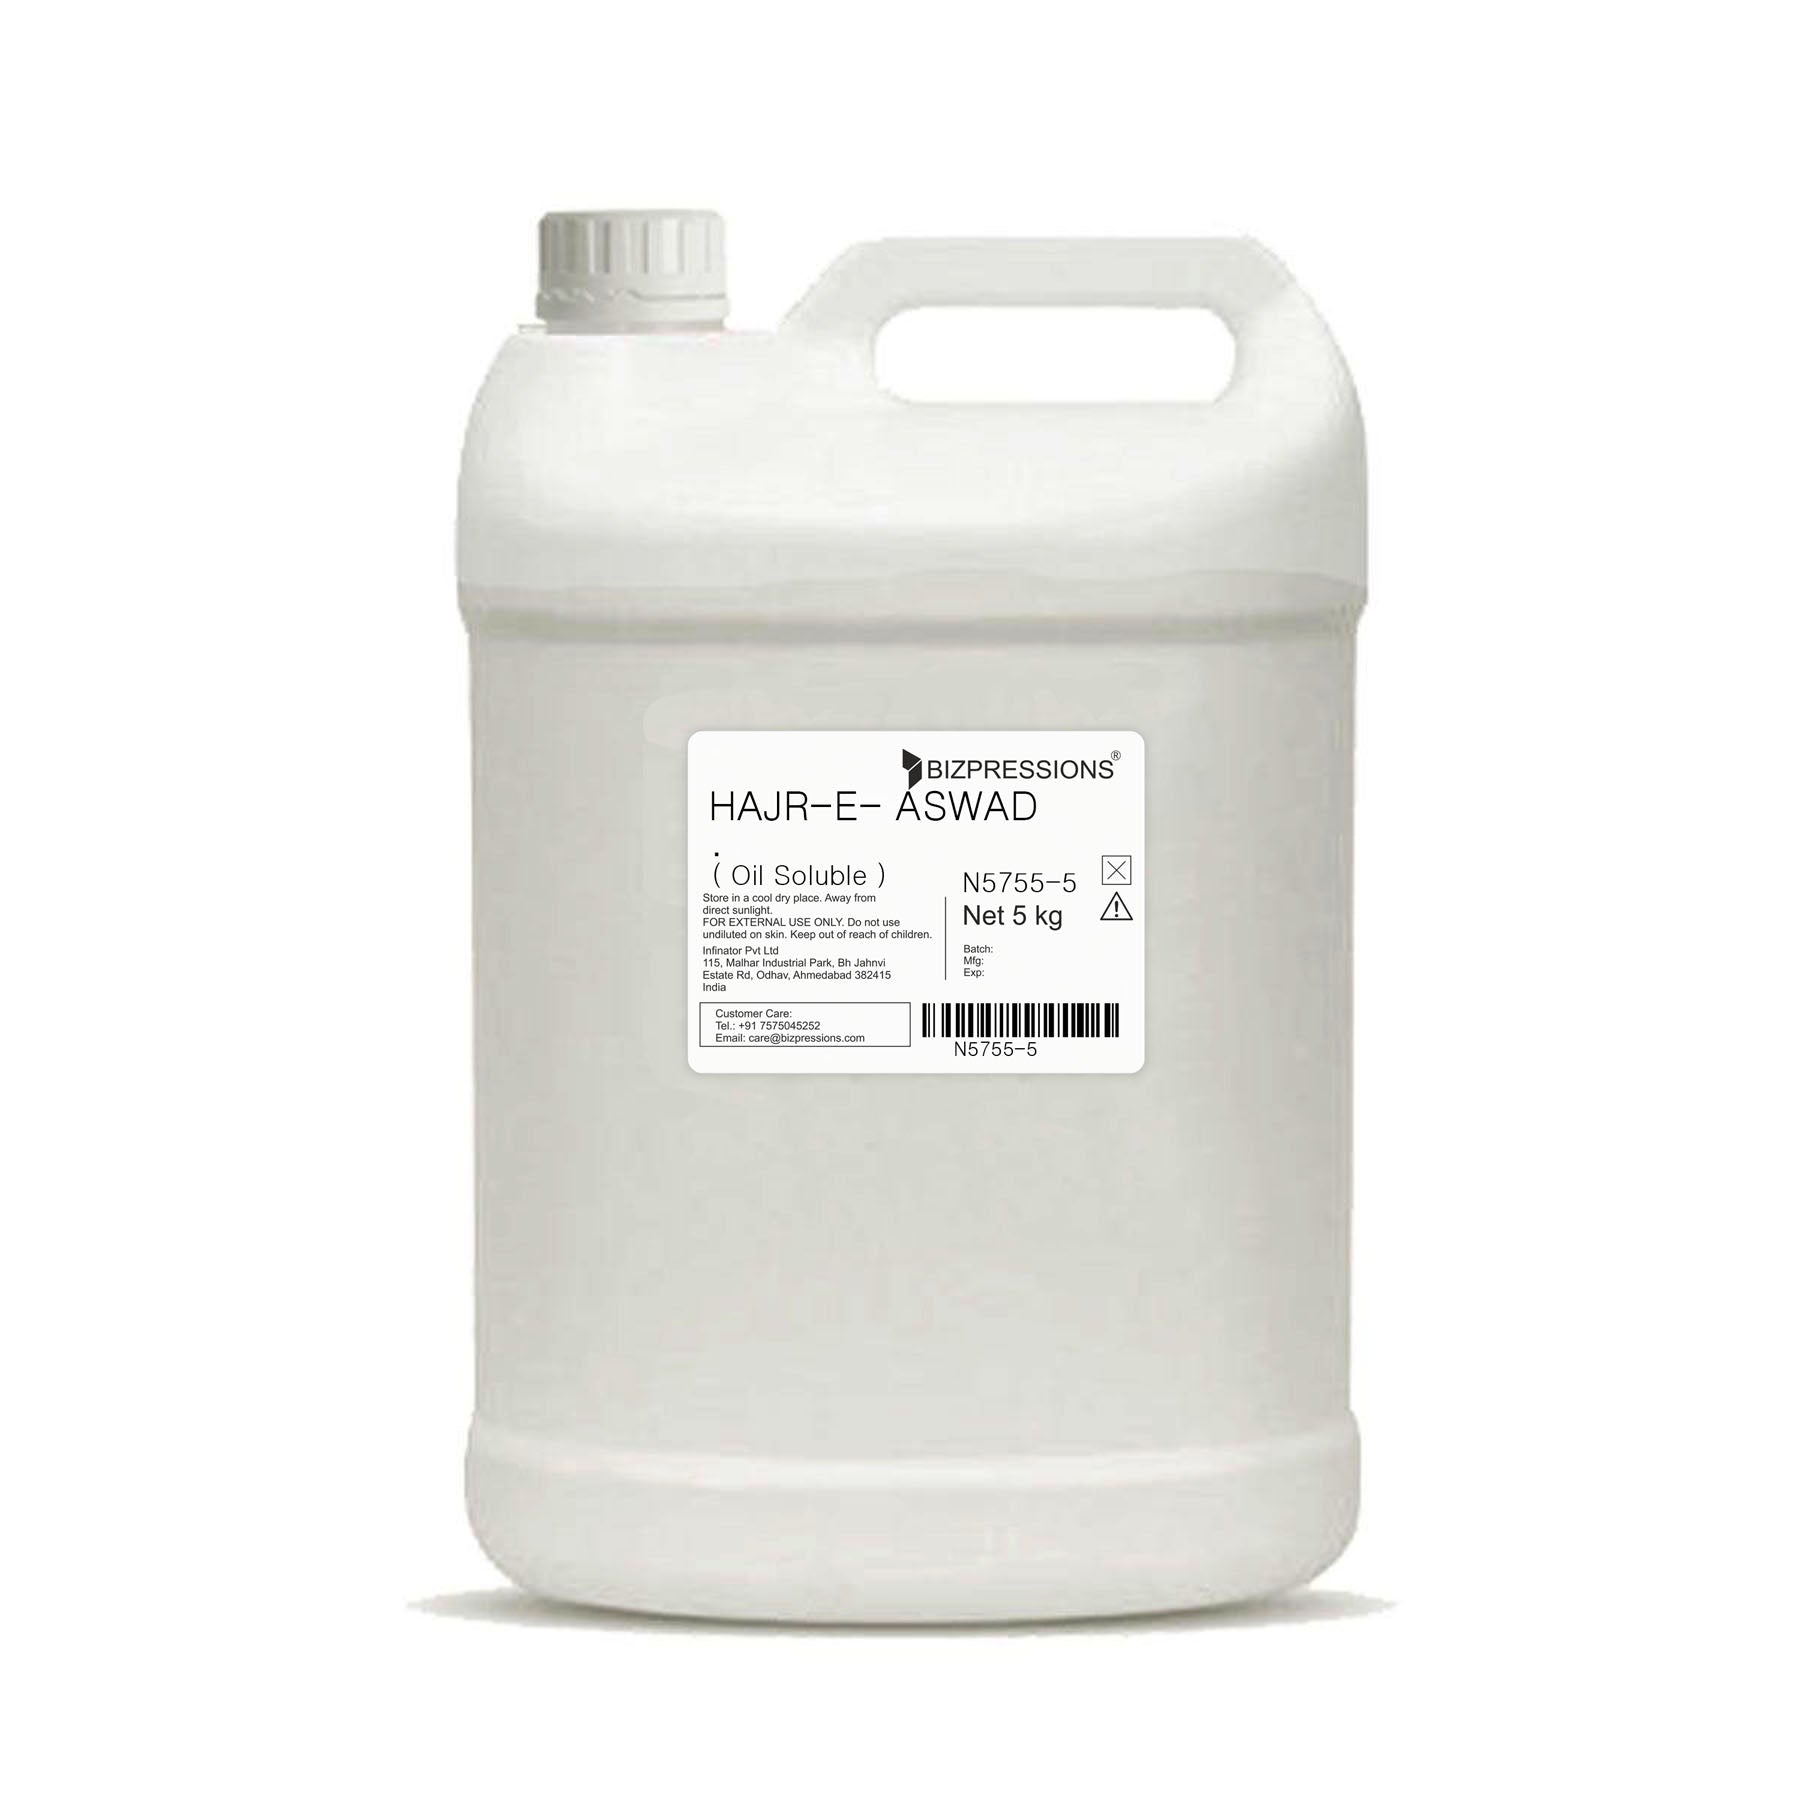 HAJR-E-ASWAD - Fragrance ( Oil Soluble ) - 5 kg